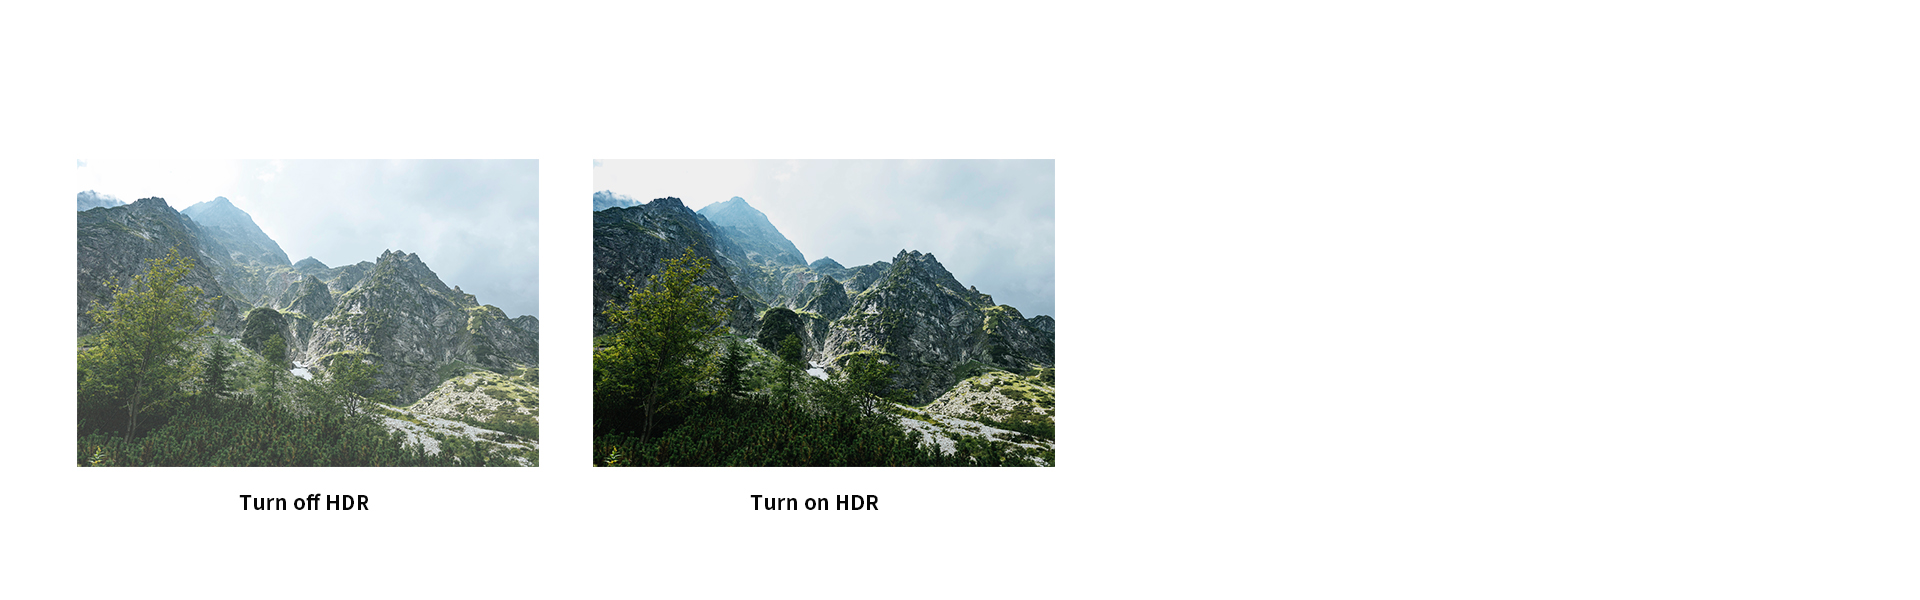 HDR high dynamic range imaging